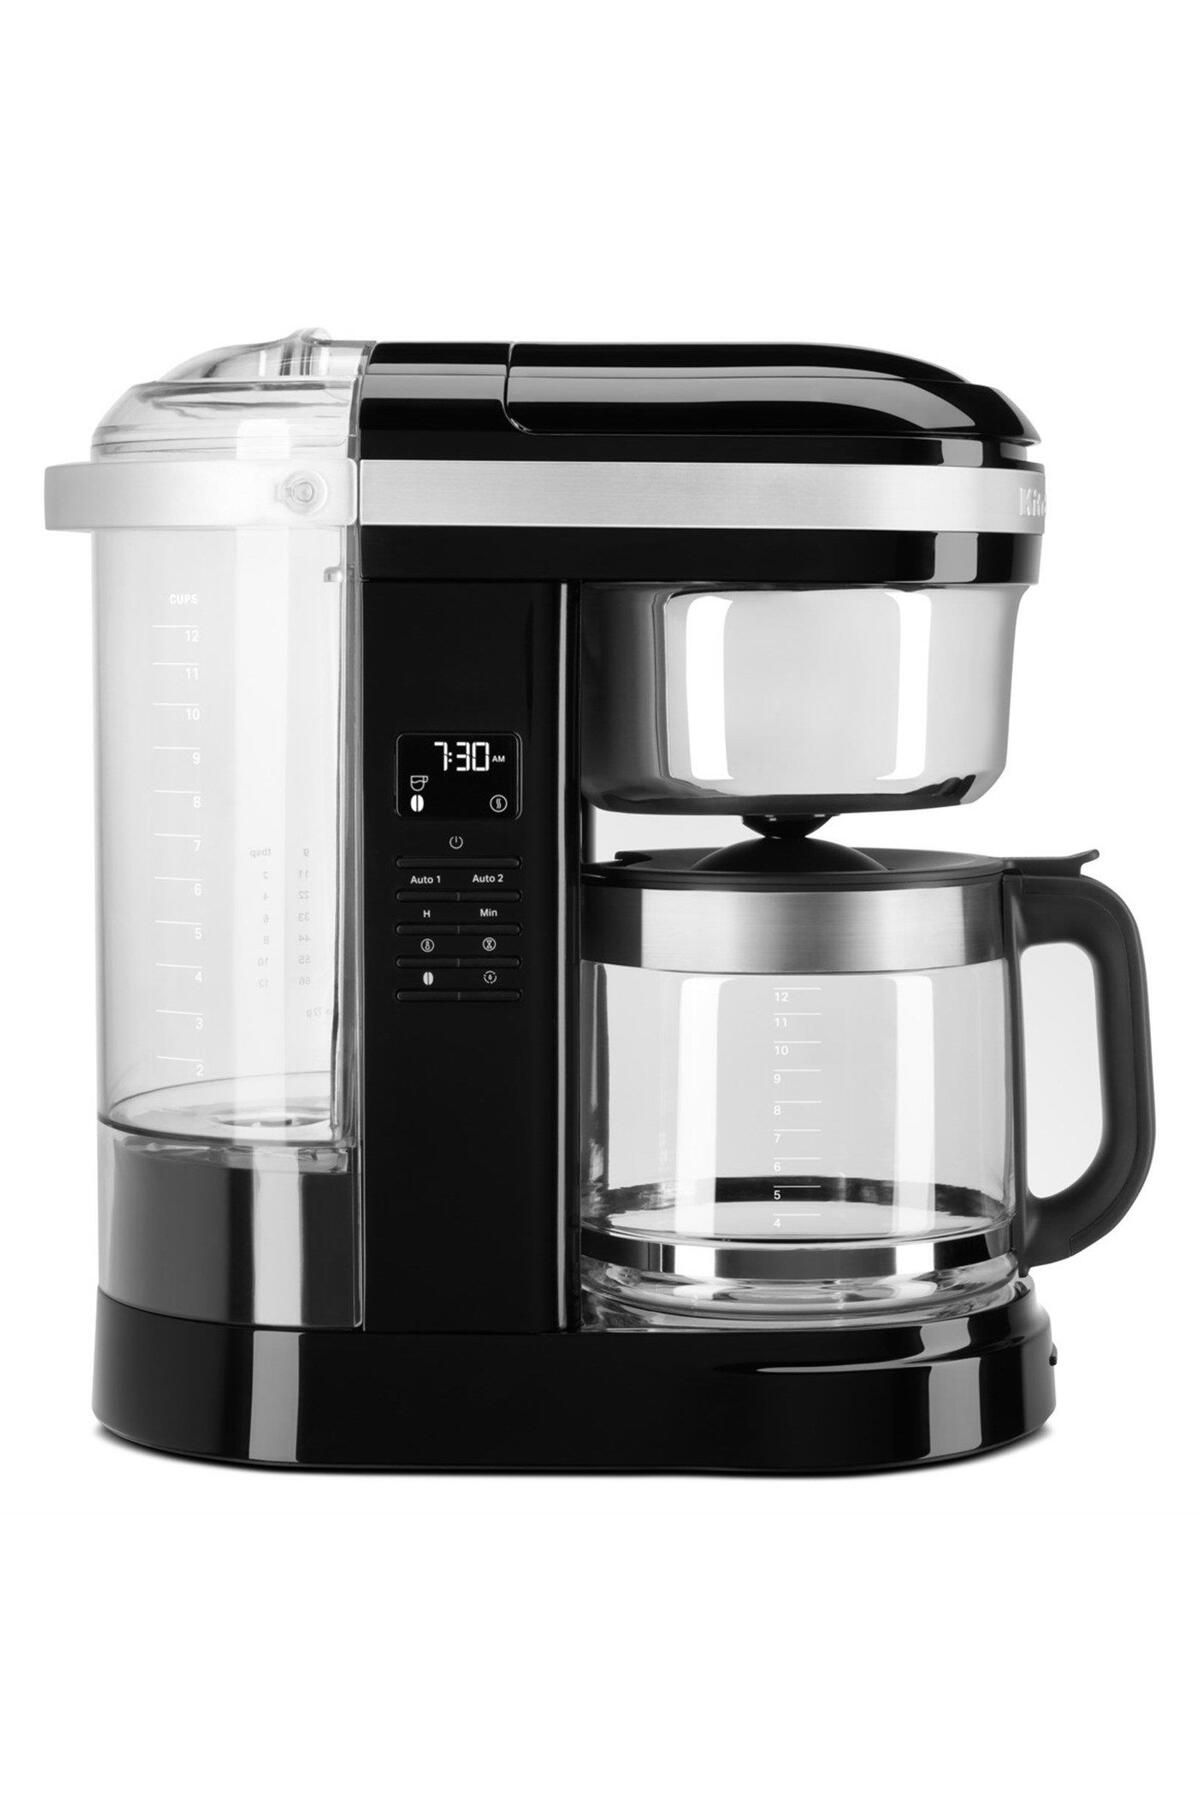 Kitchenaid Filtre Kahve Makinesi 5kcm1209 Onyx Black-eob